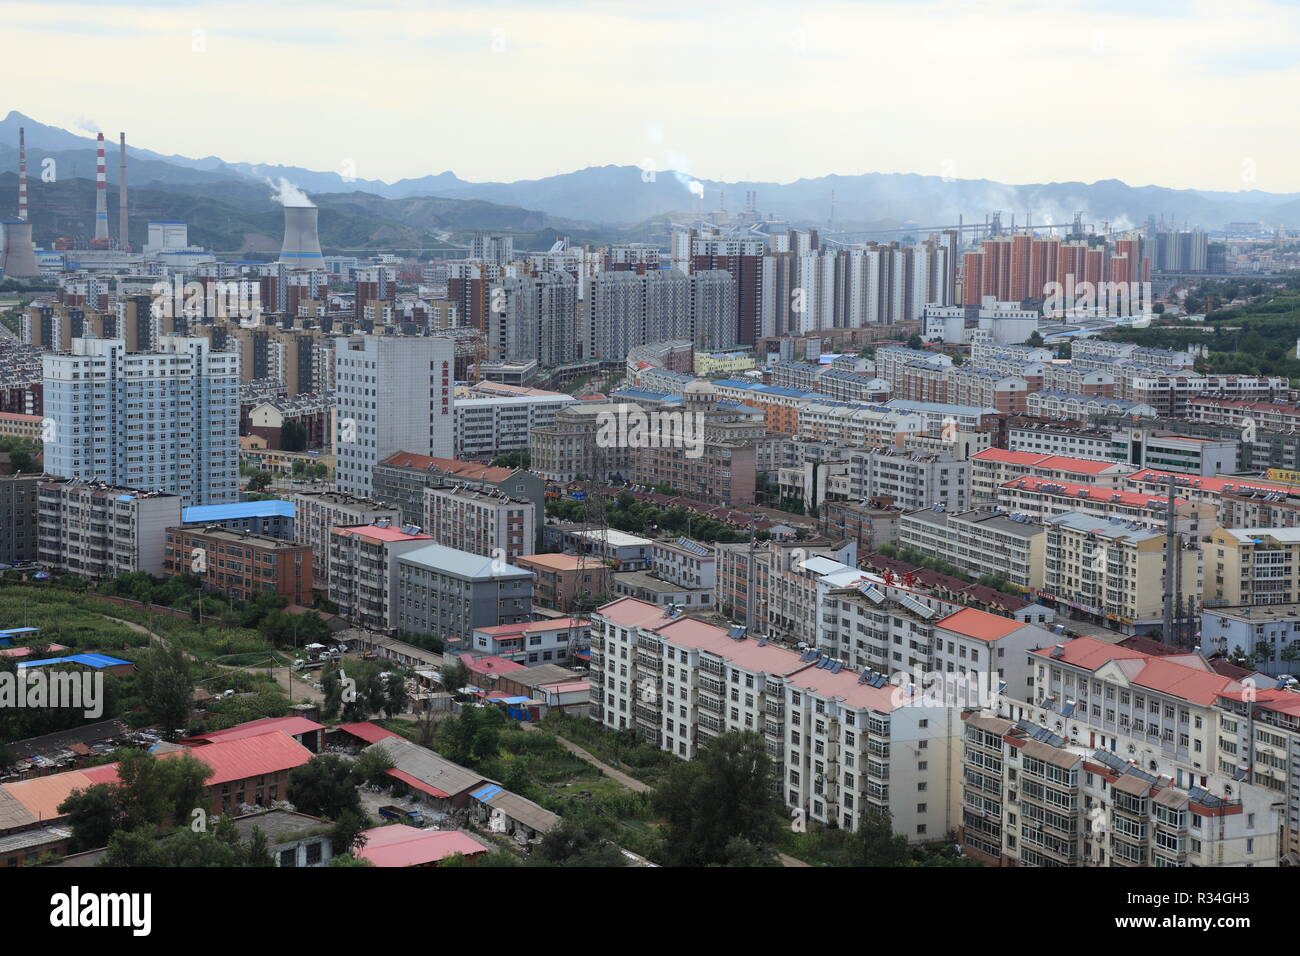 the chengde city in china Stock Photo